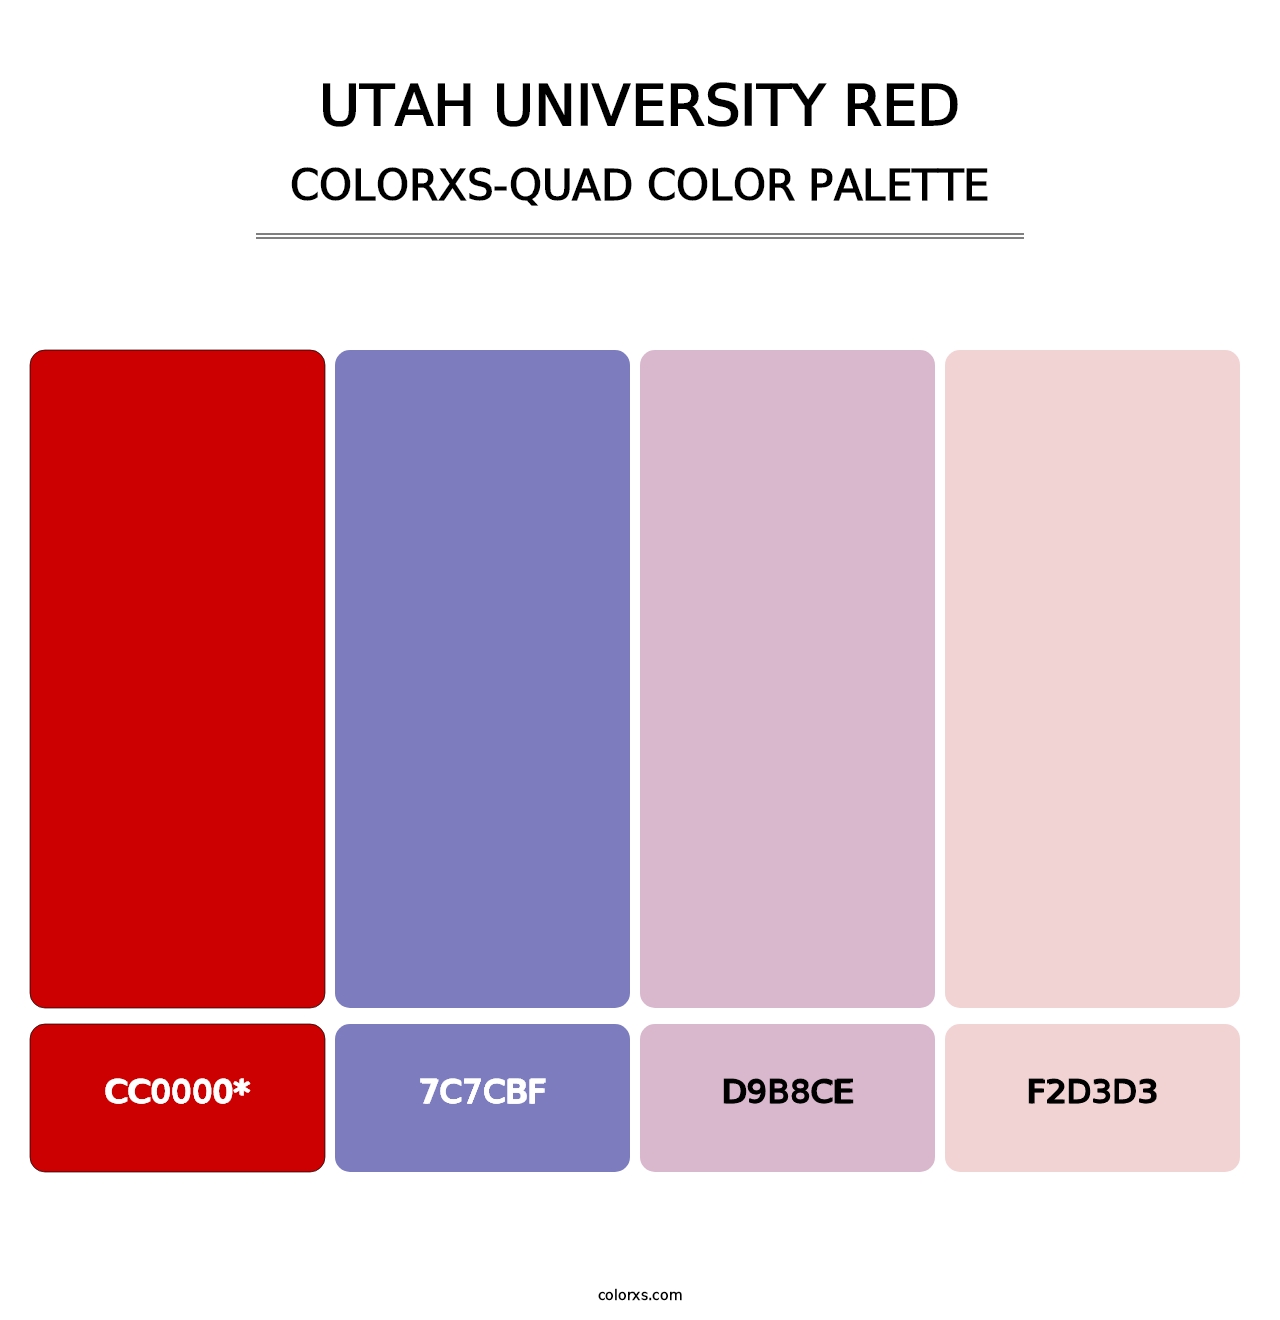 Utah University Red - Colorxs Quad Palette